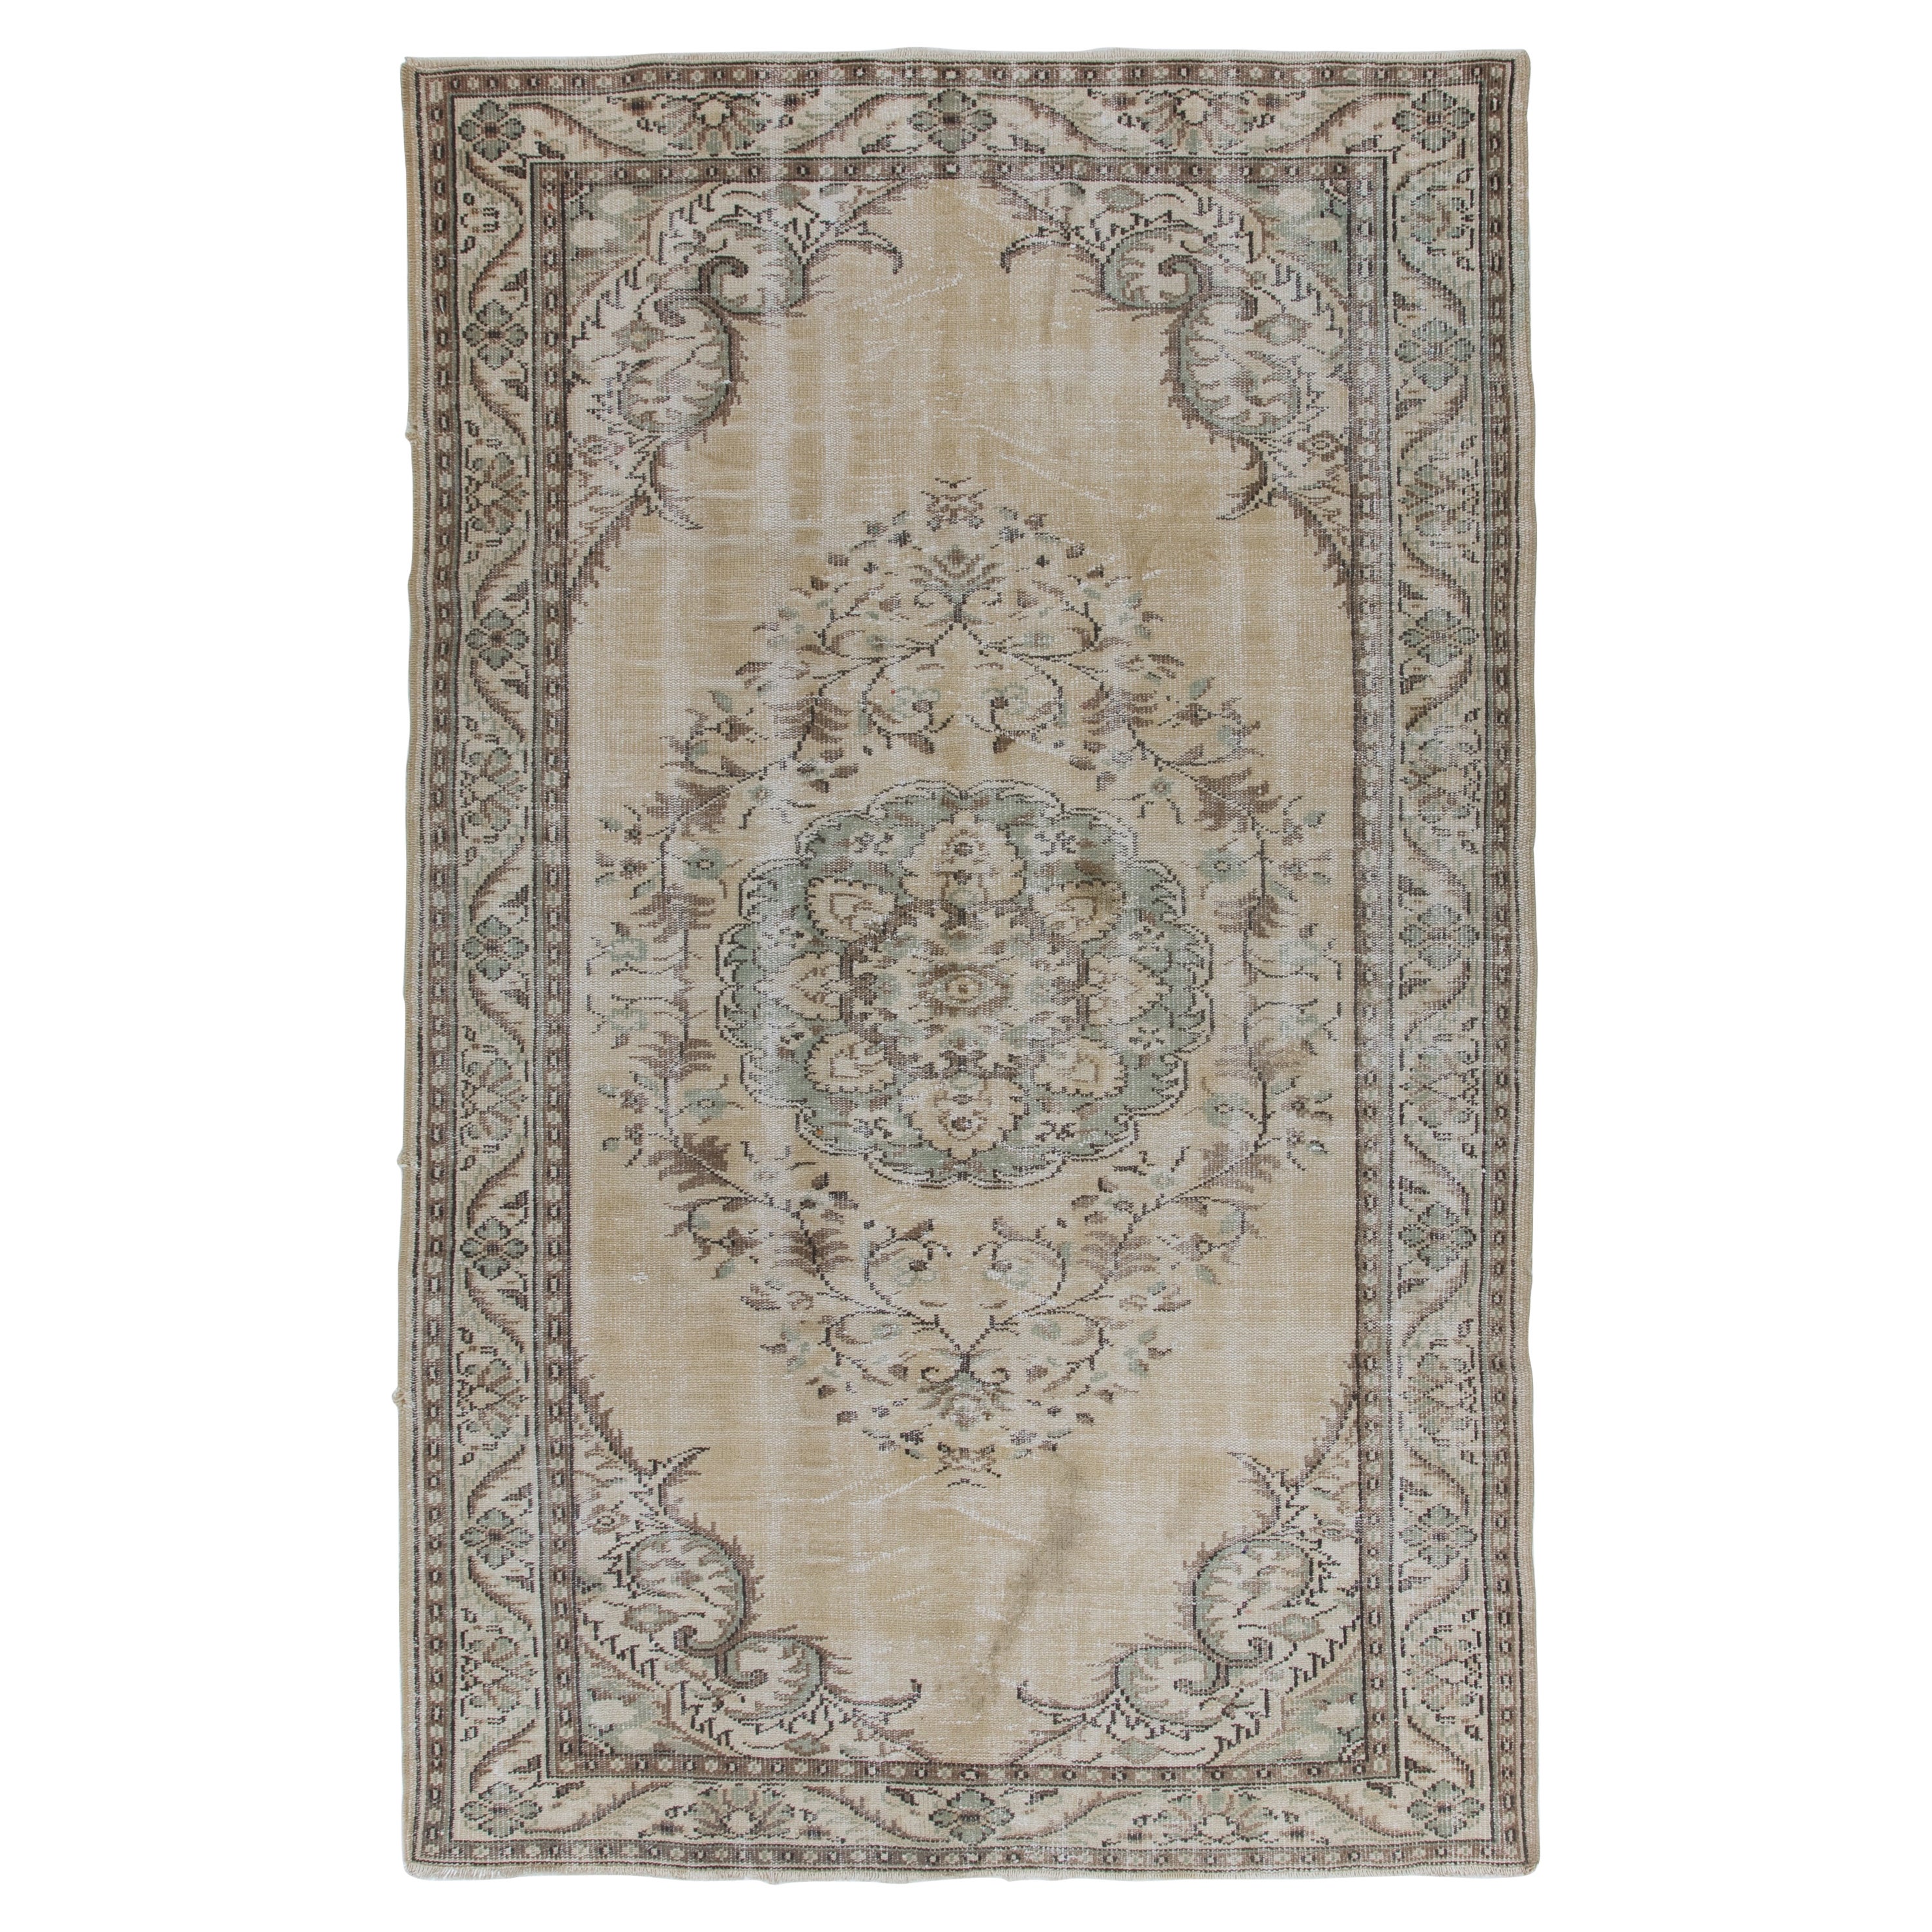 6.2x9.8 Ft Vintage Turkish Area Rug, Wool Hand Made Carpet, Floor Covering